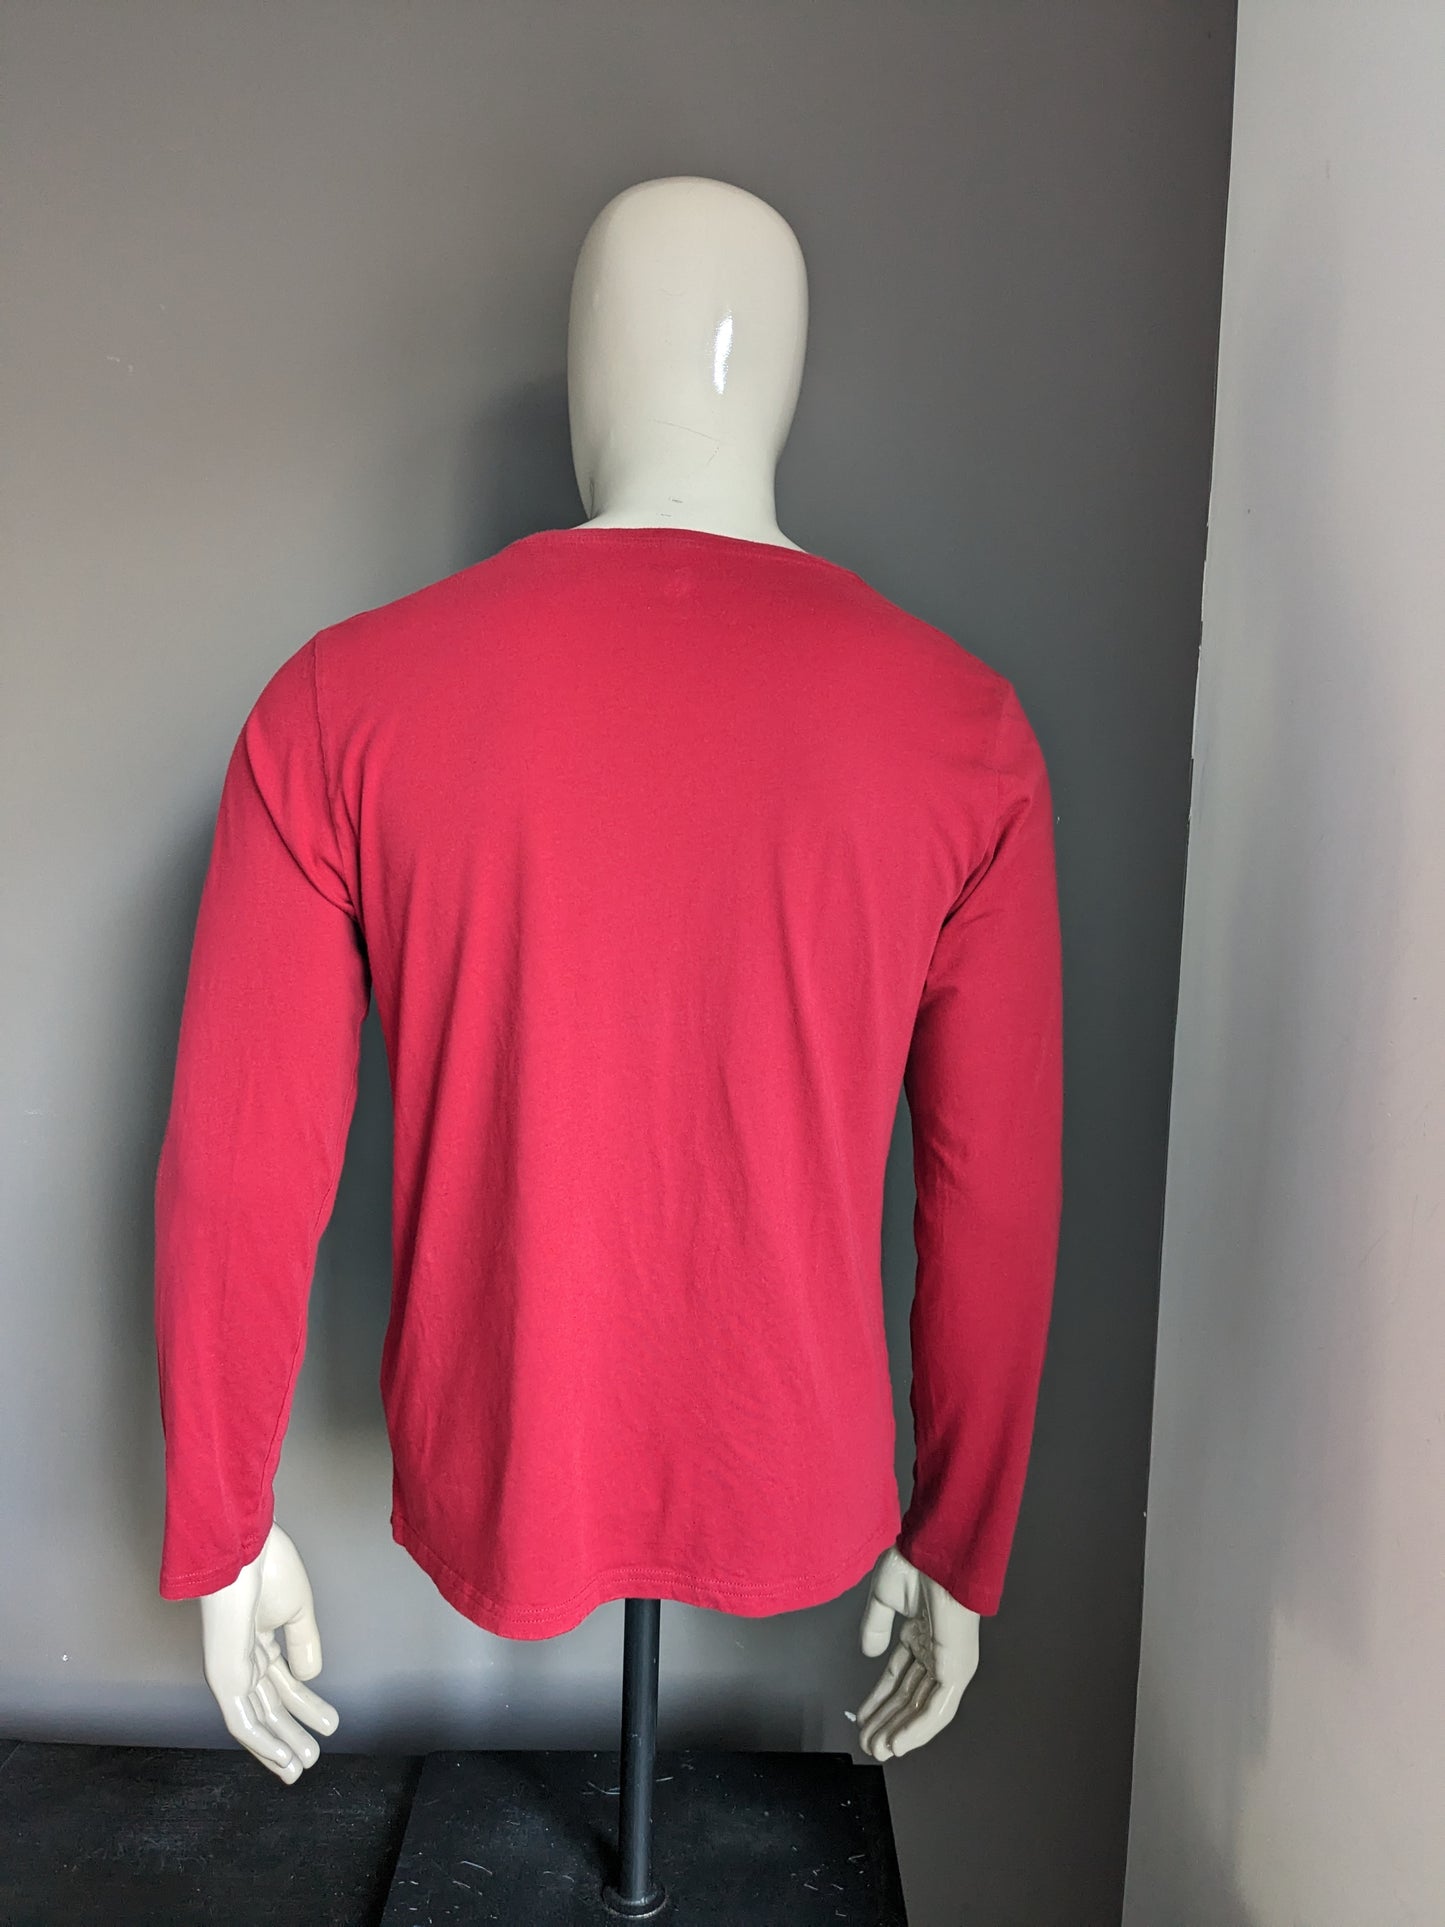 Polo Ralph Lauren Underwear Longsleeve. Colored red. Size M.